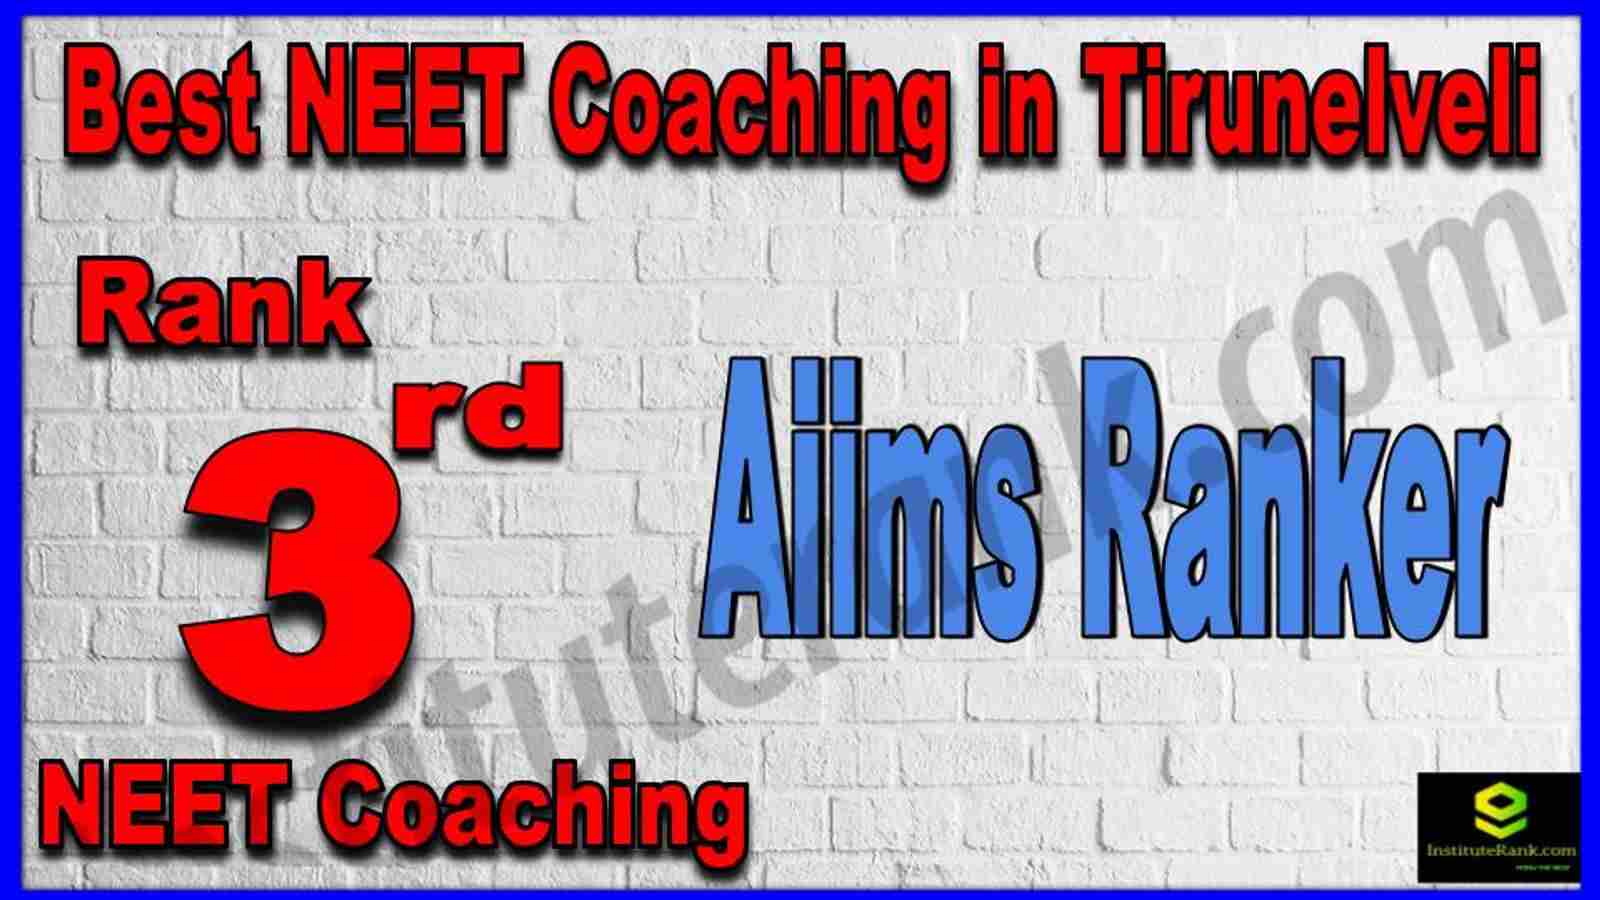 Rank 3rd Best NEET Coaching in Tirunelveli